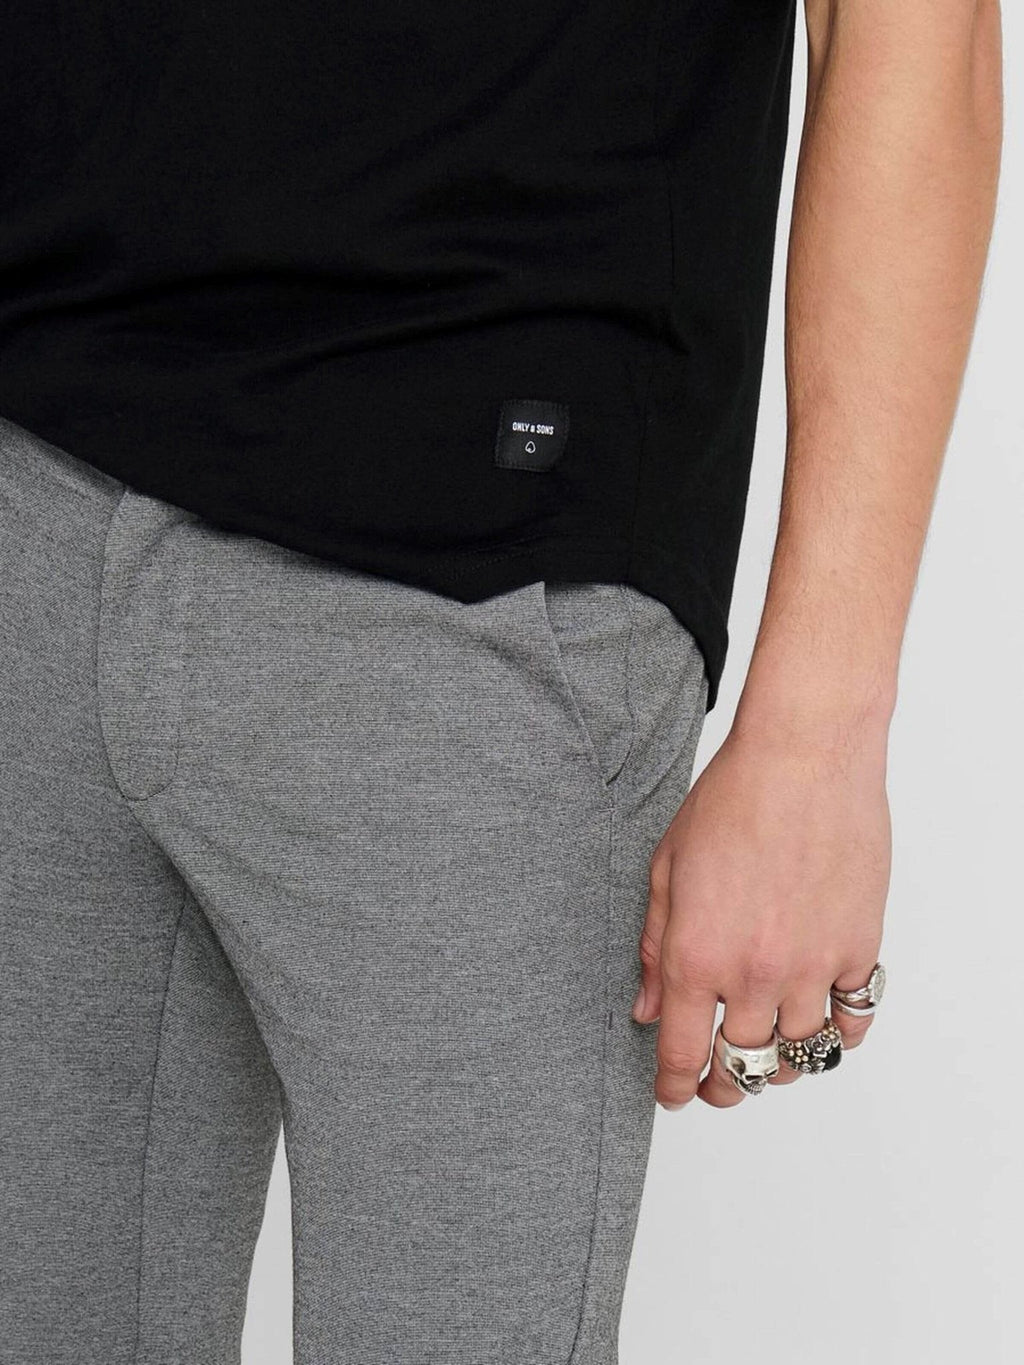 Mark pantalon - gris clair (pantalon extensible)